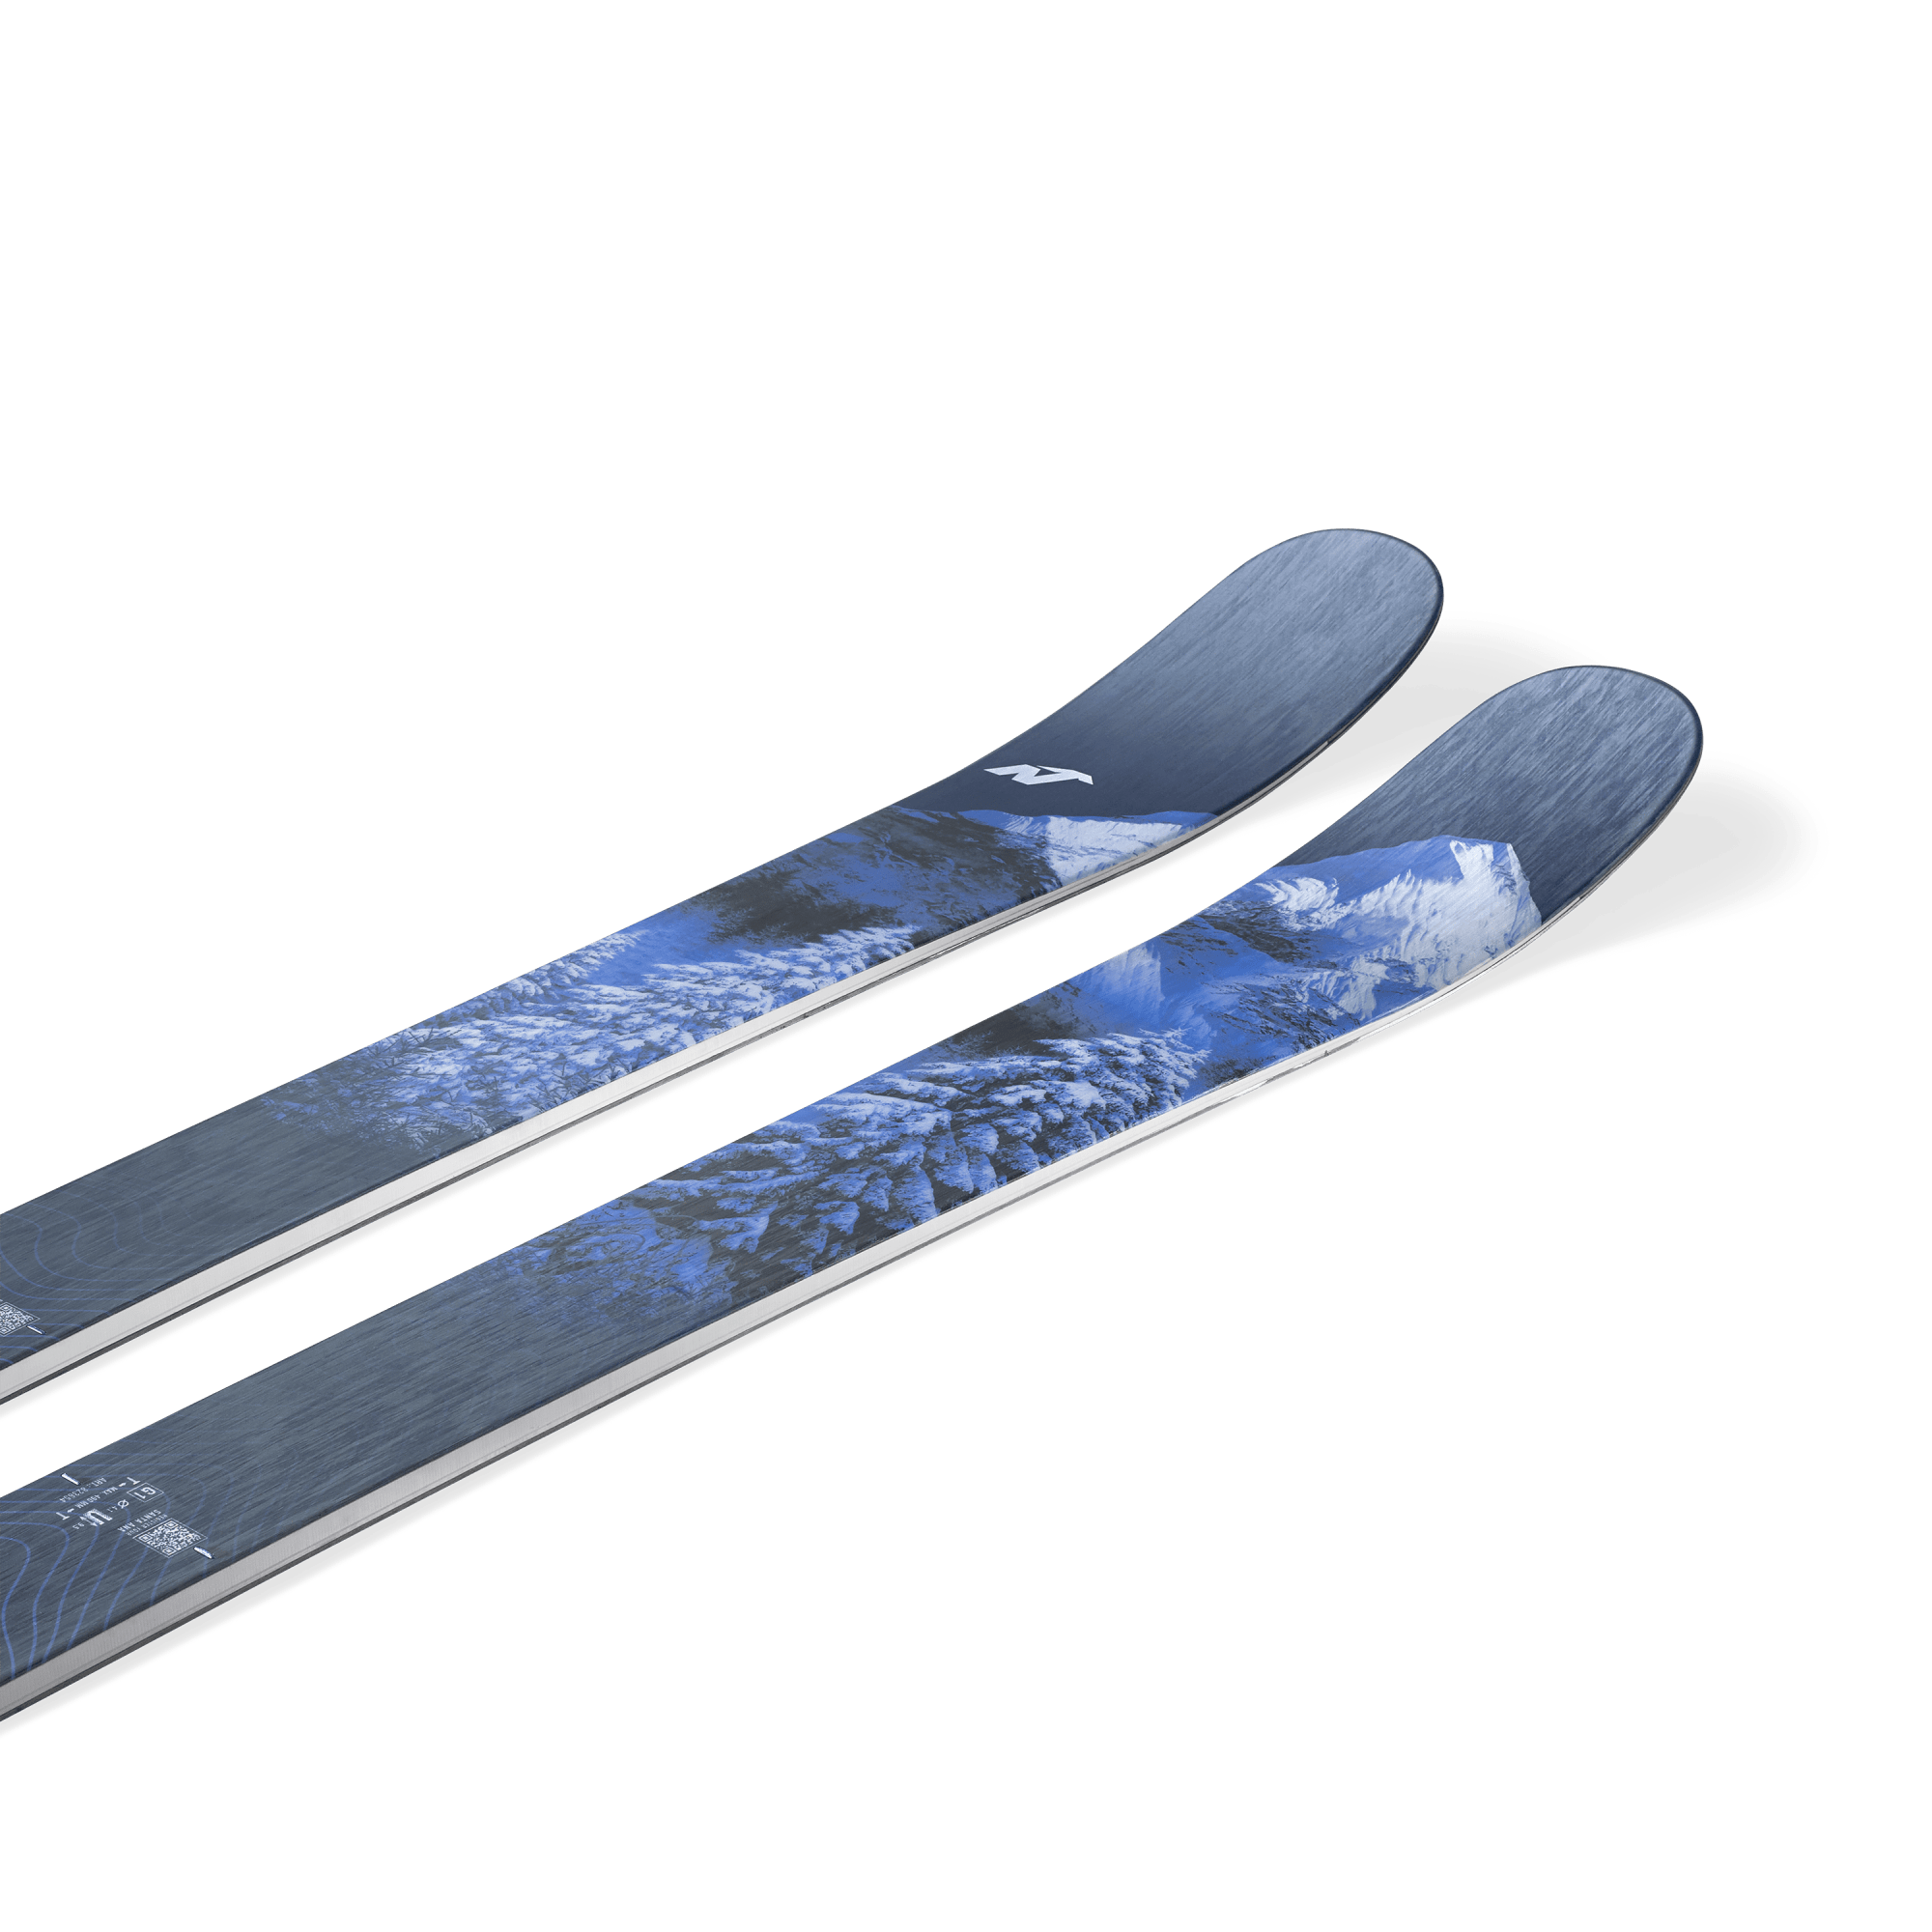 Nordica Santa Ana 93 Skis · Women's · 2023